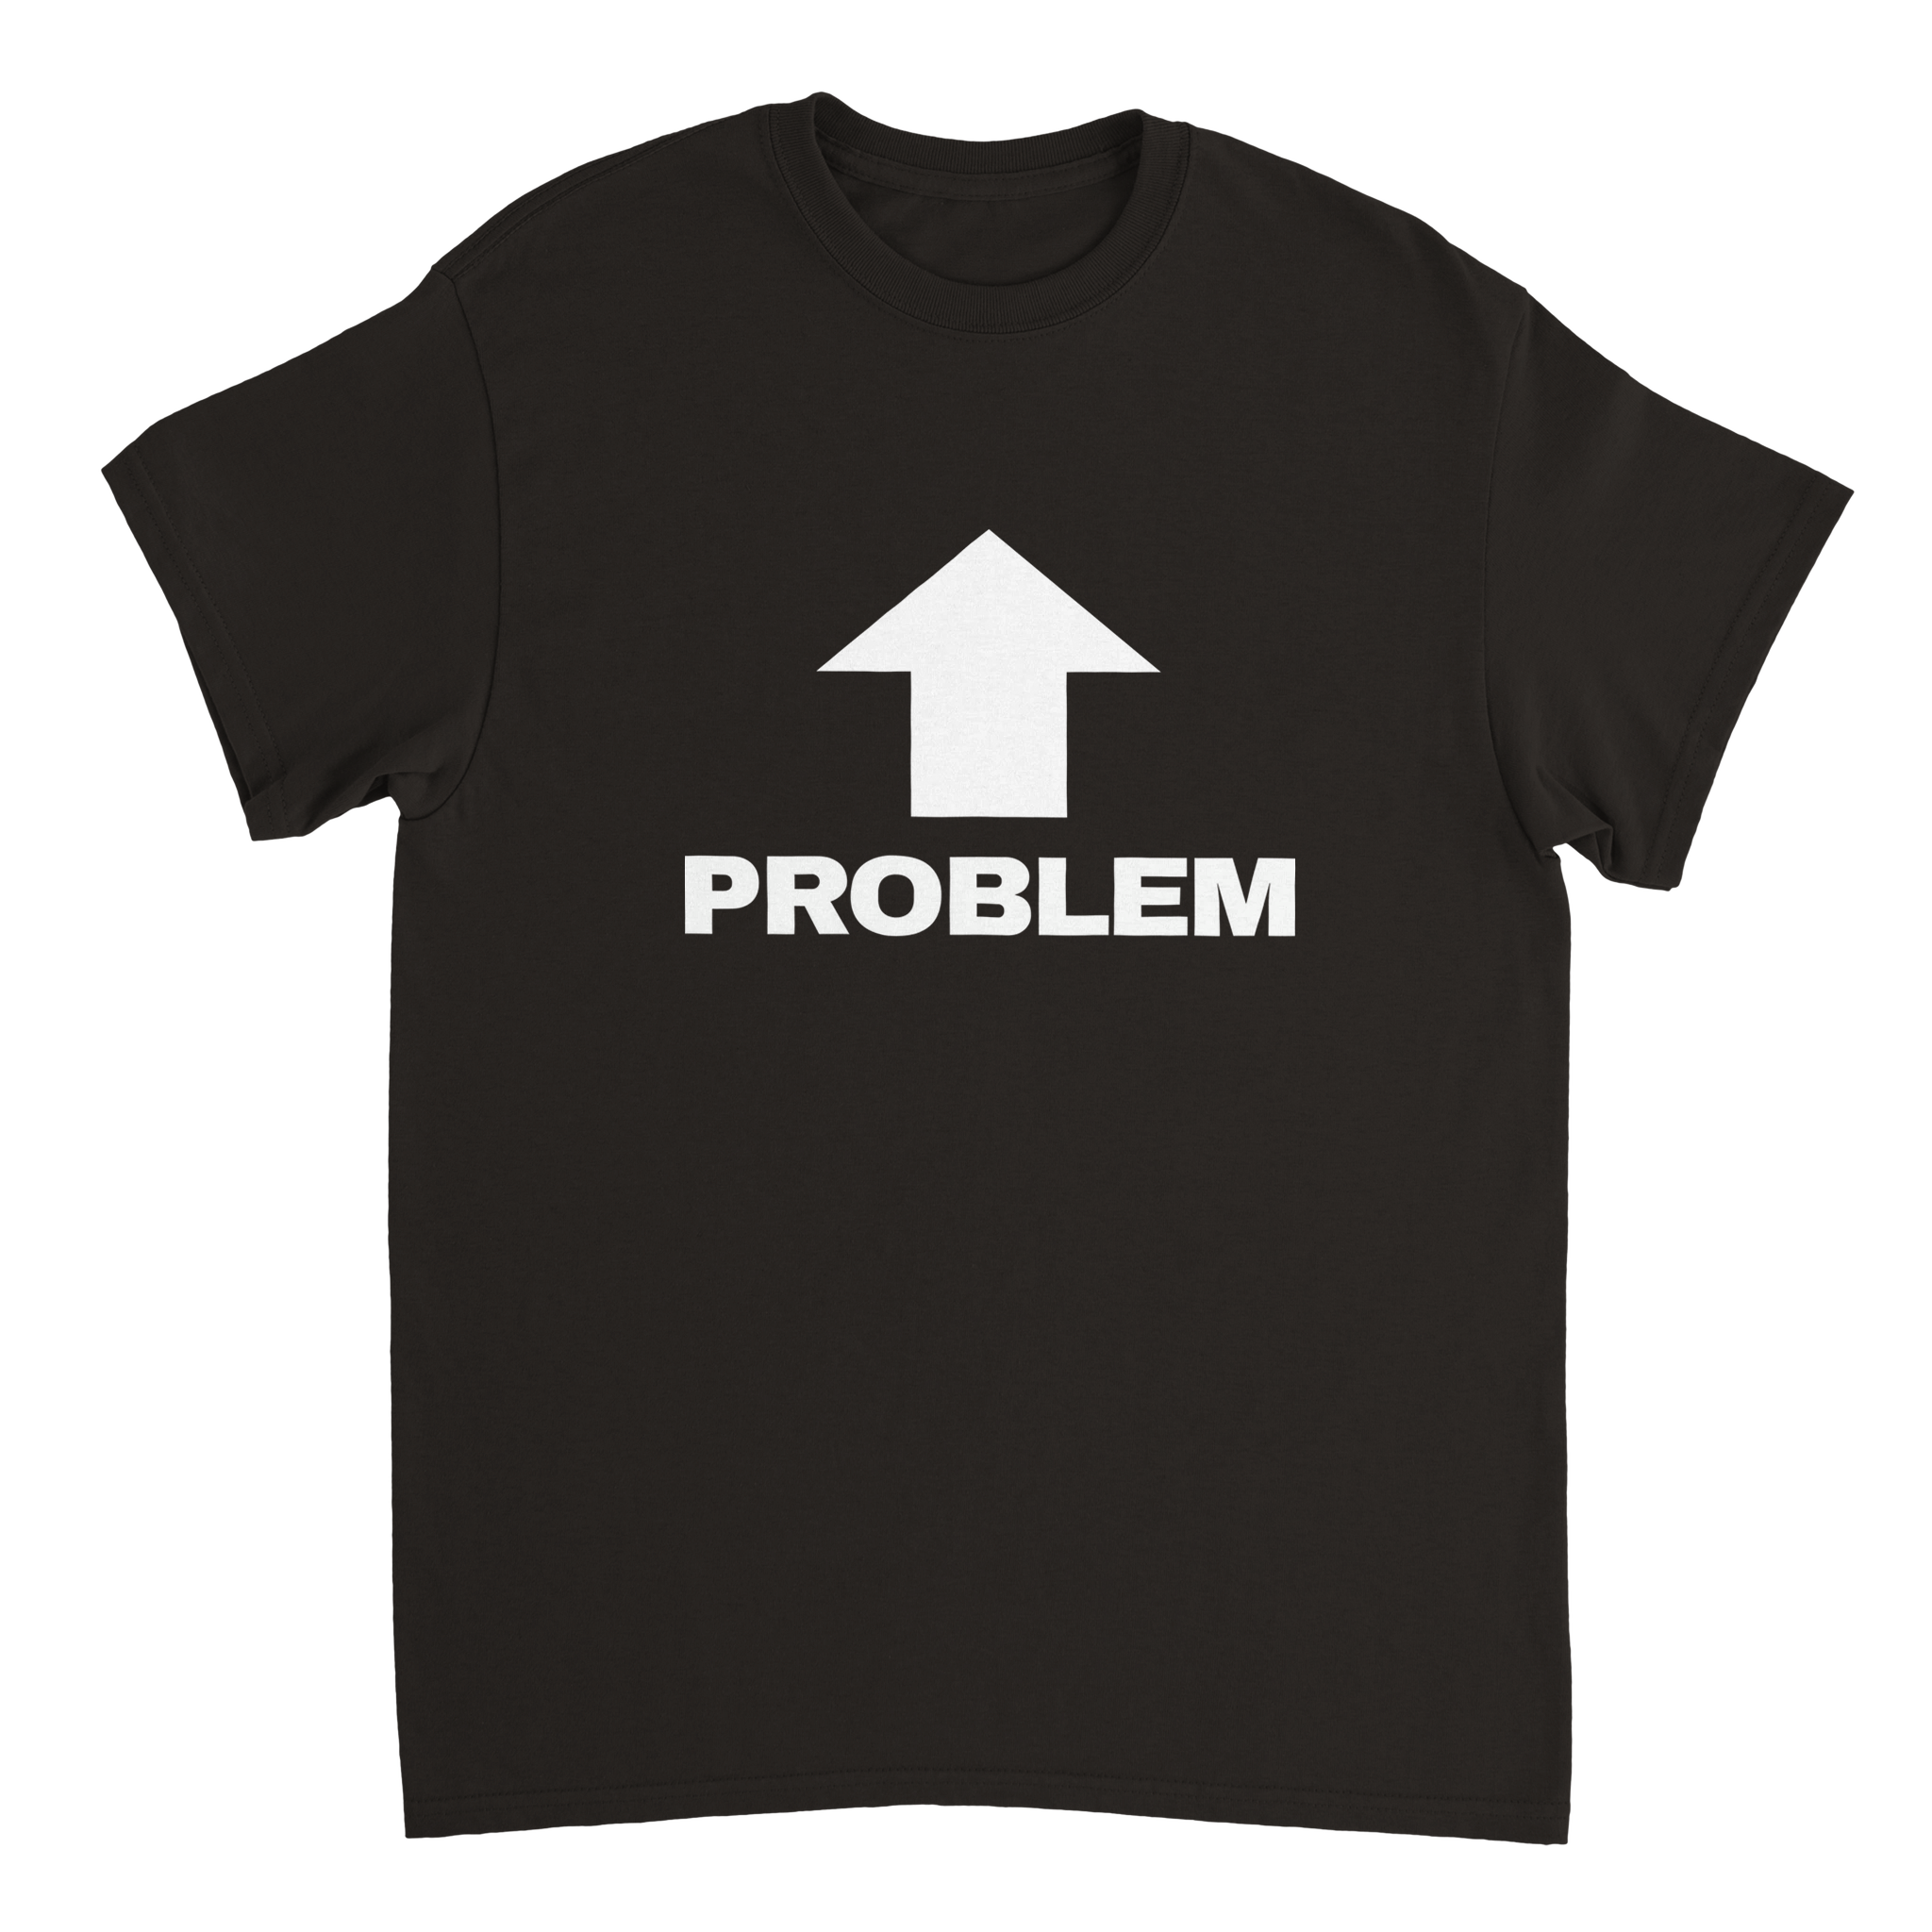 The Problem T-shirt